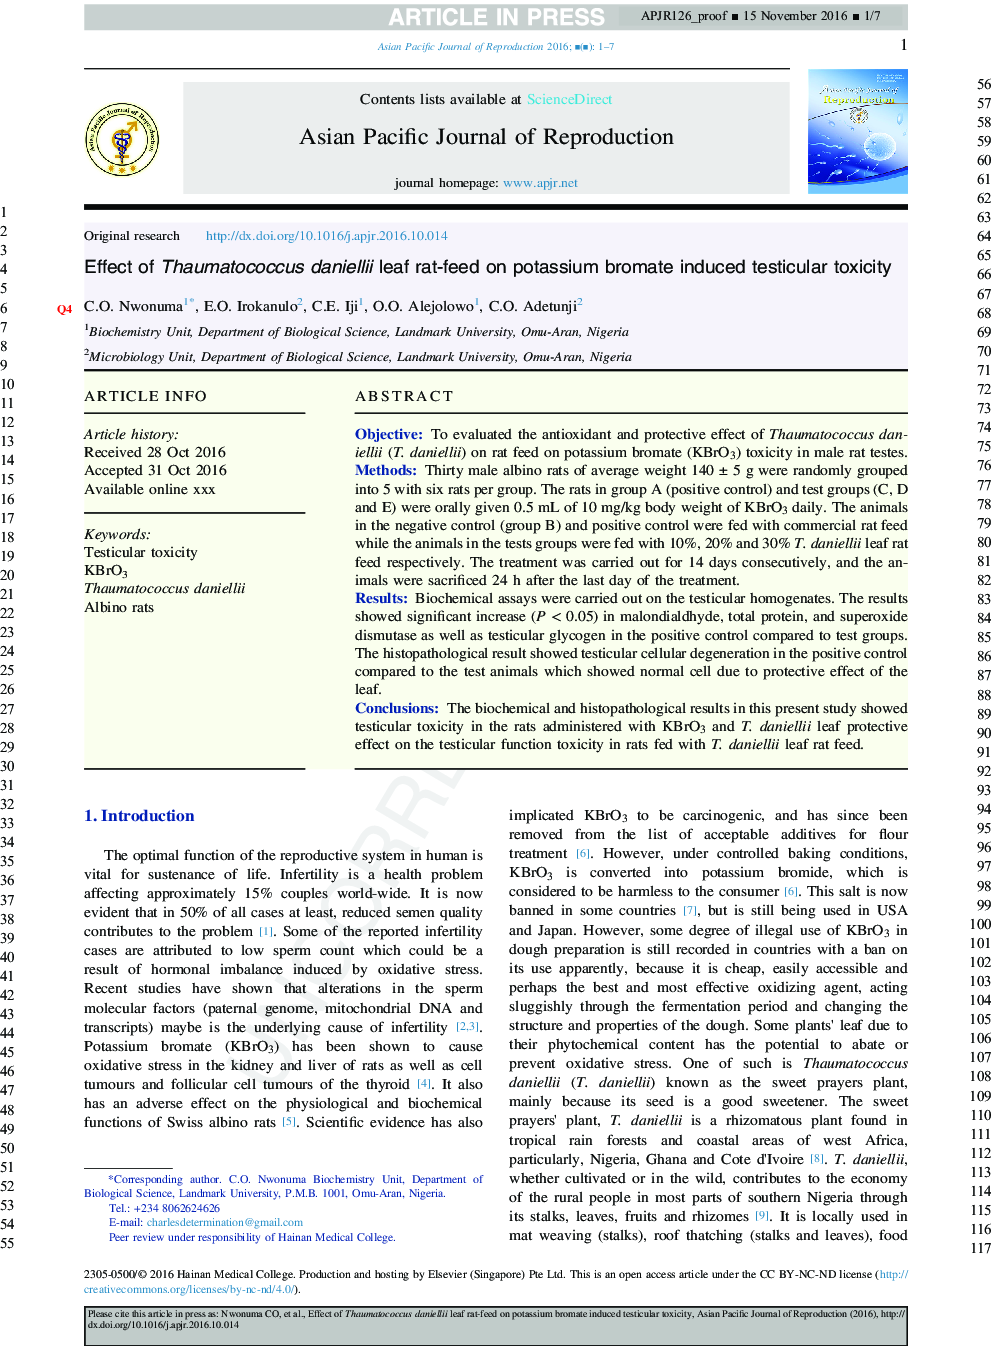 Effect of Thaumatococcus daniellii leaf rat-feed on potassium bromate induced testicular toxicity